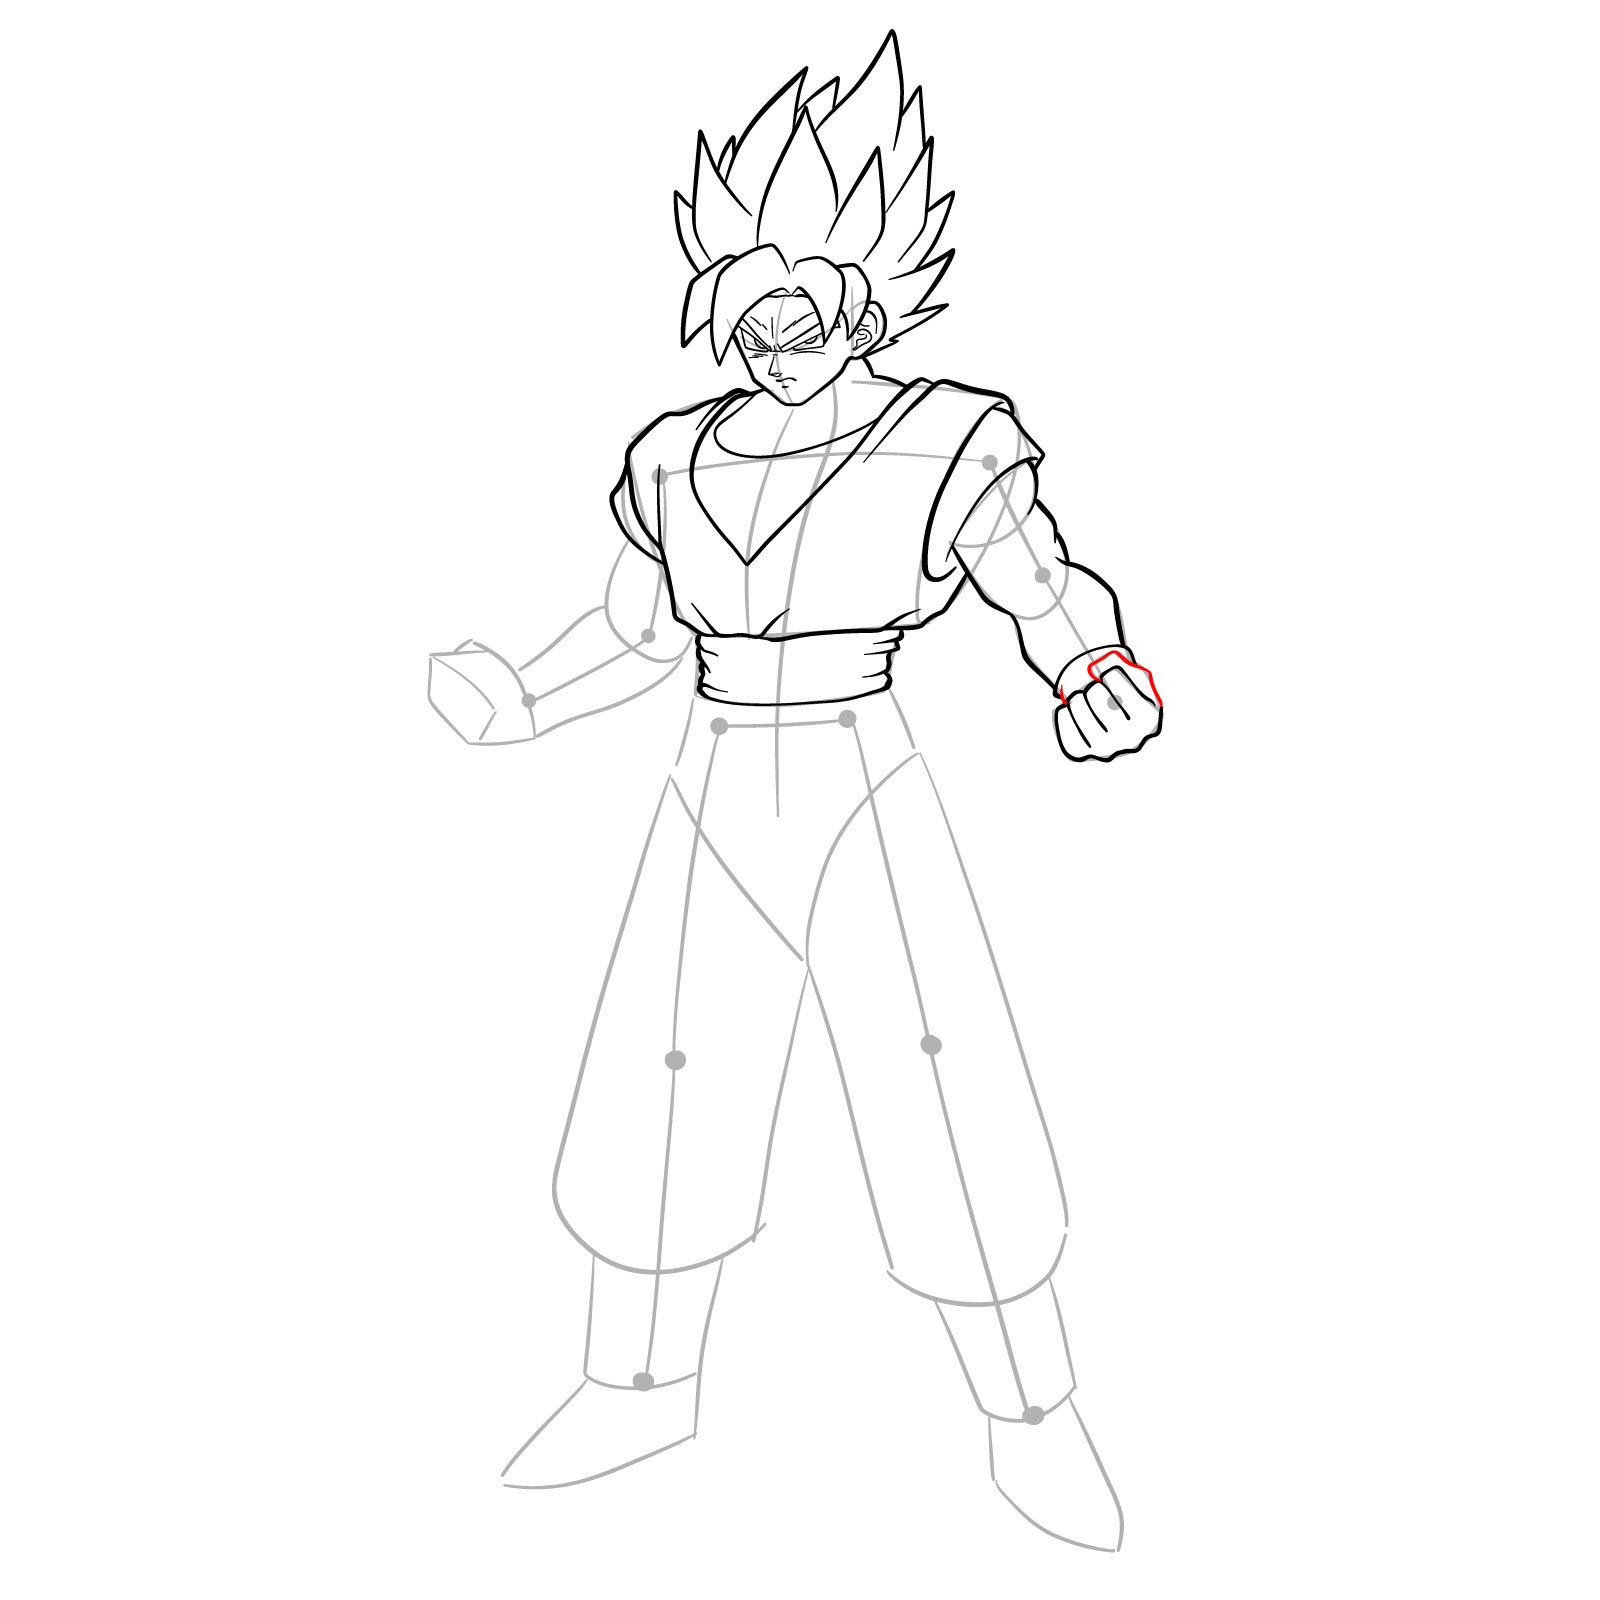 How to draw Goku in Super Saiyan form - step 24